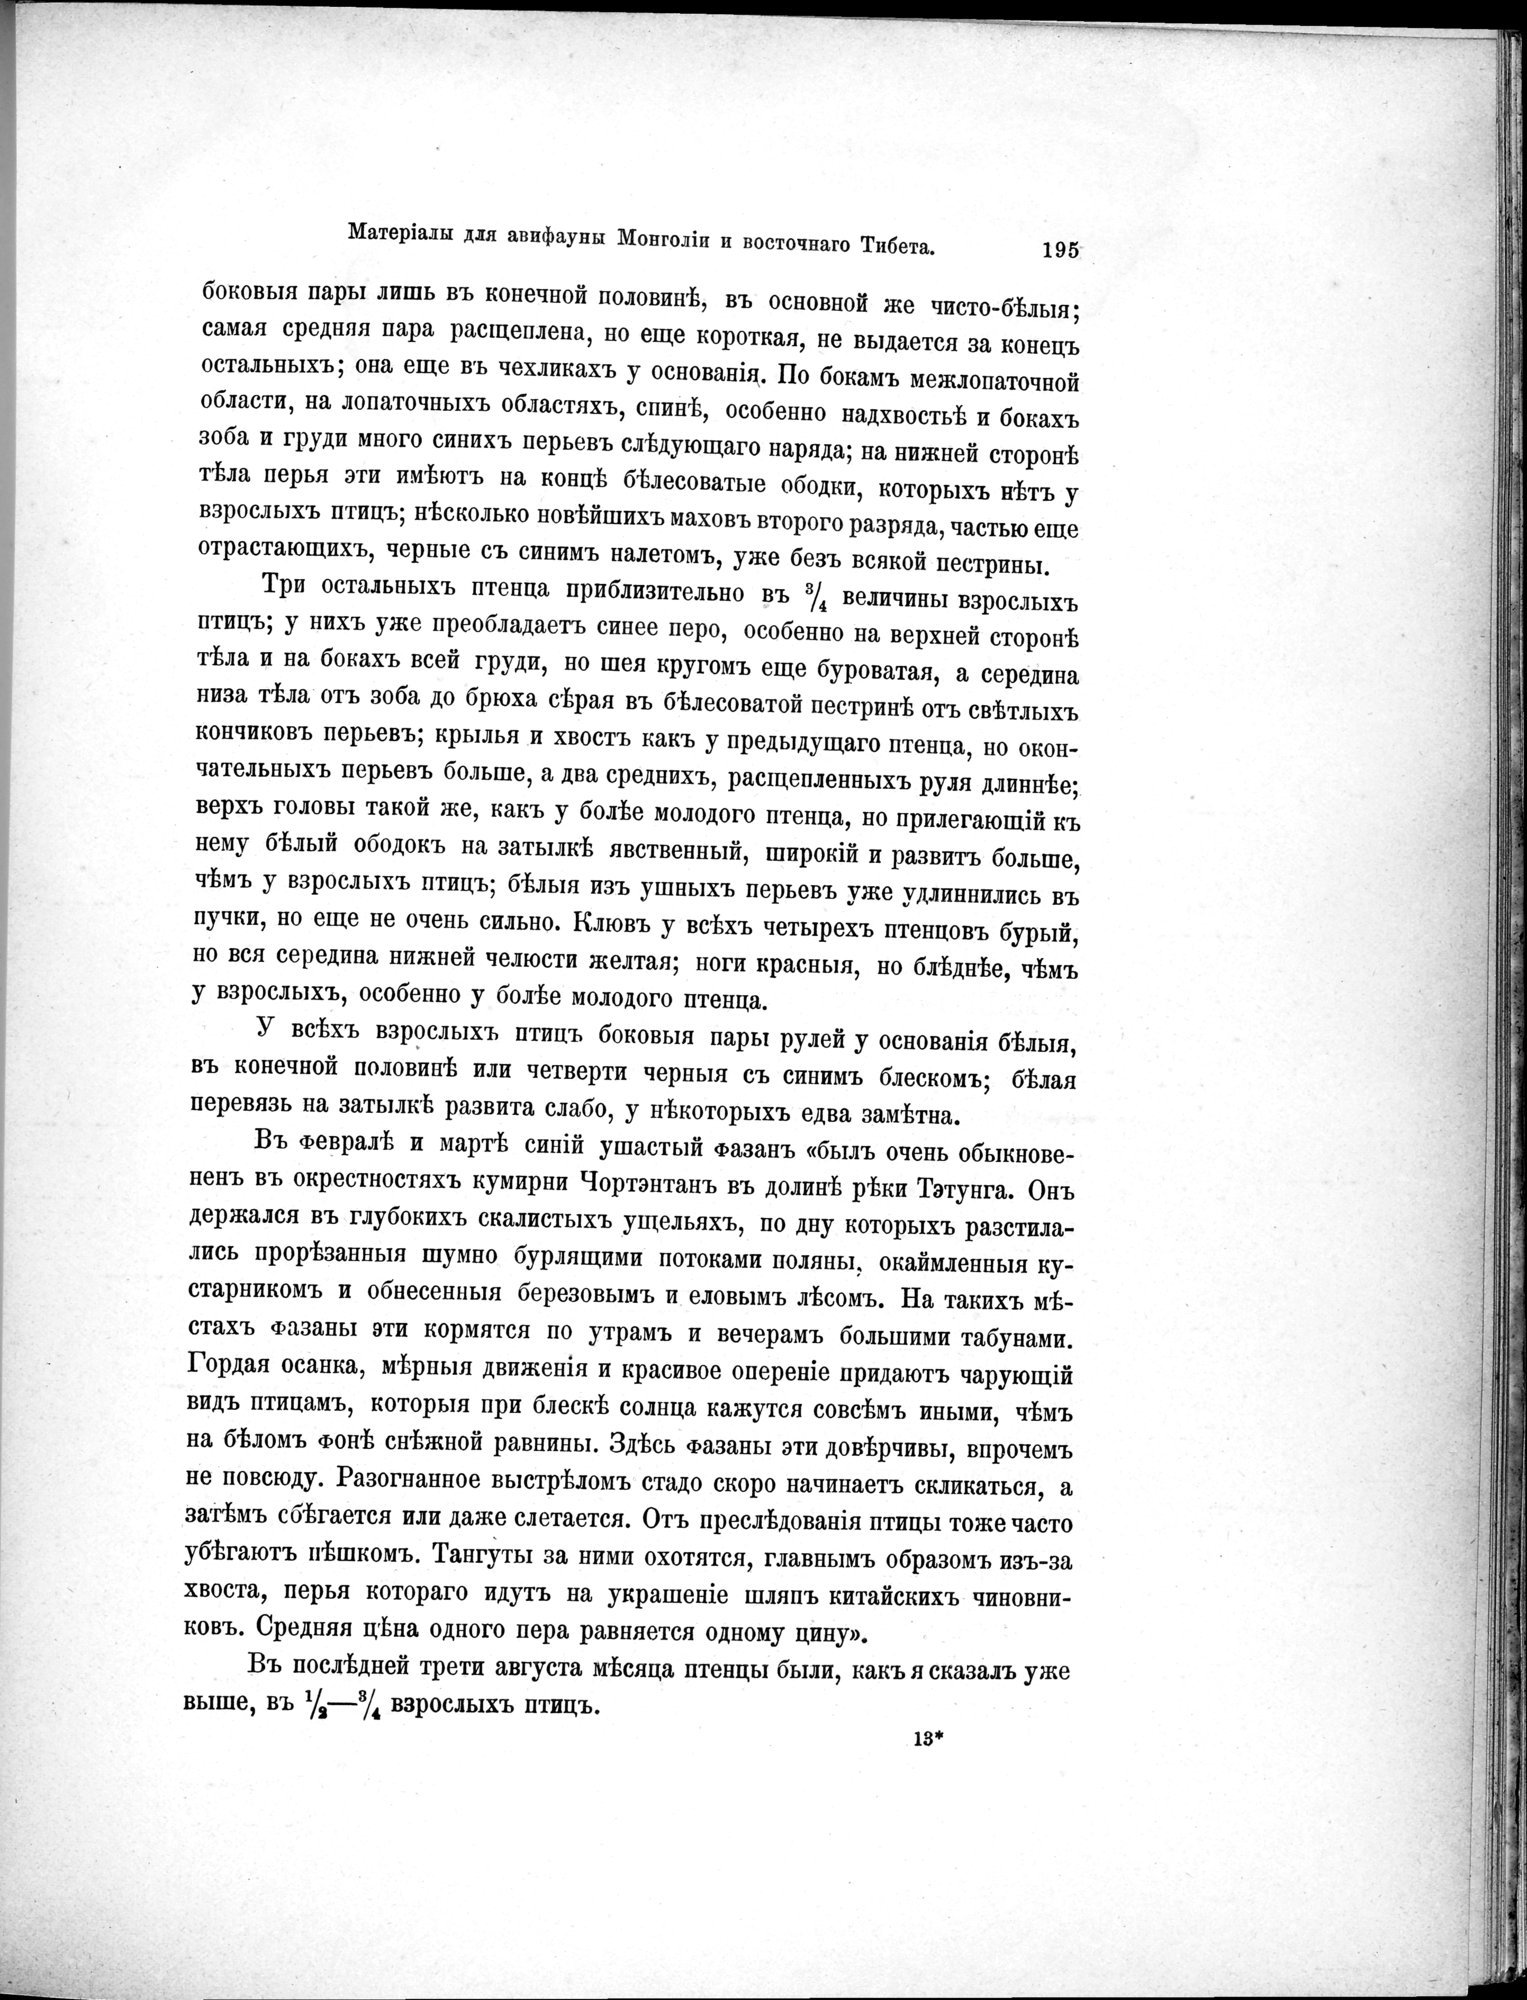 Mongoliia i Kam : vol.5 / Page 267 (Grayscale High Resolution Image)